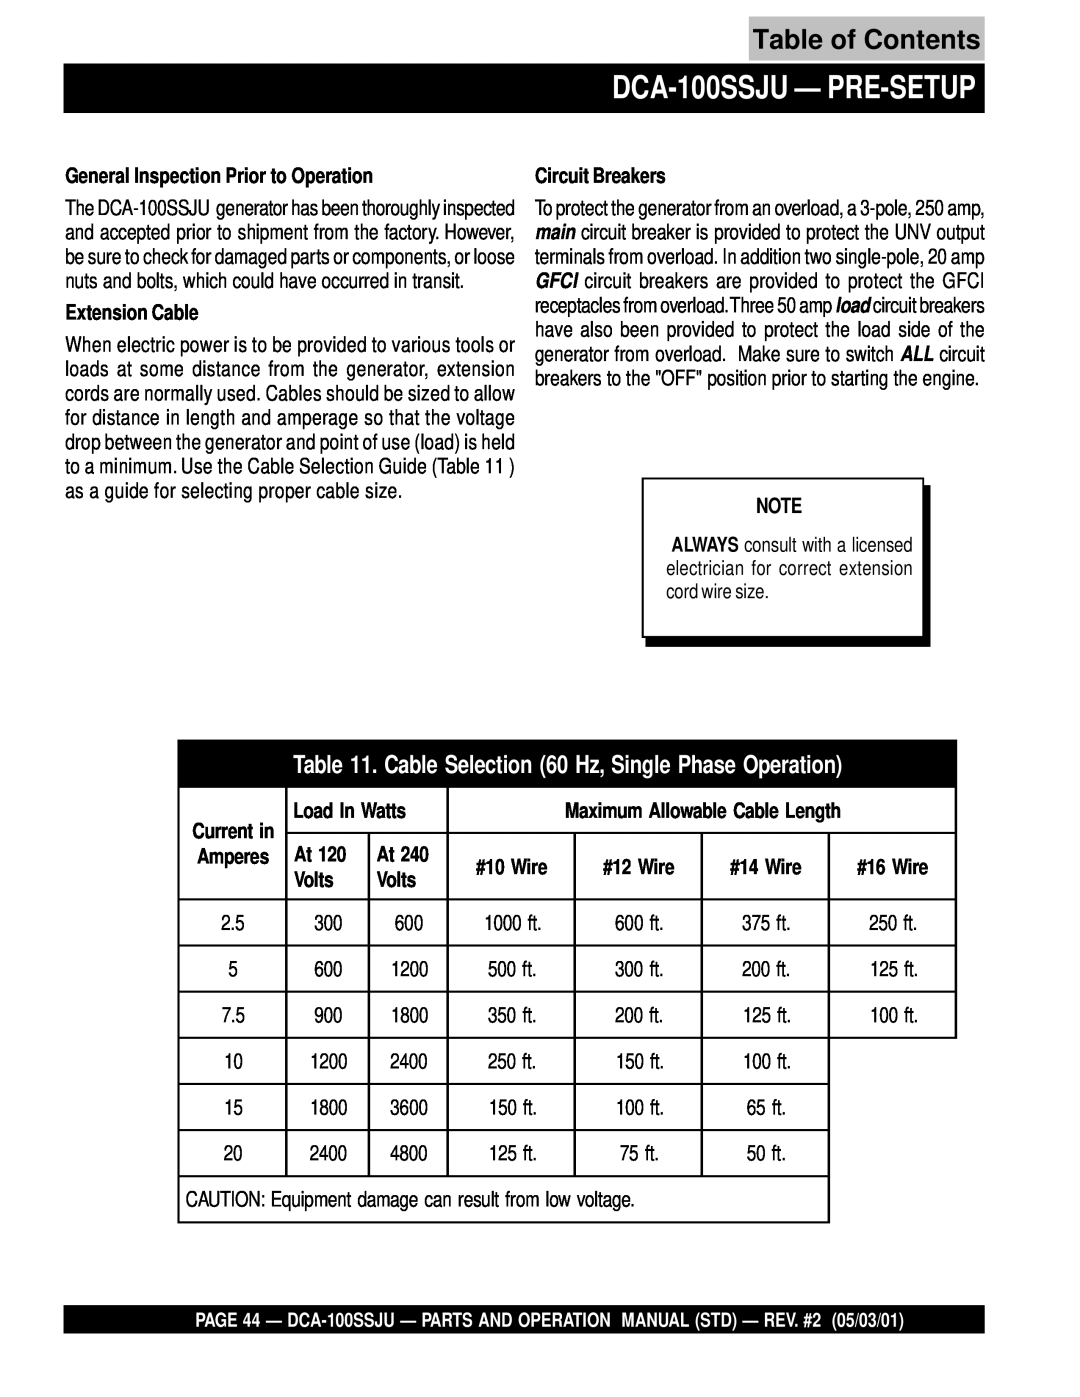 Multiquip operation manual DCA-100SSJU— PRE-SETUP, Table of Contents 